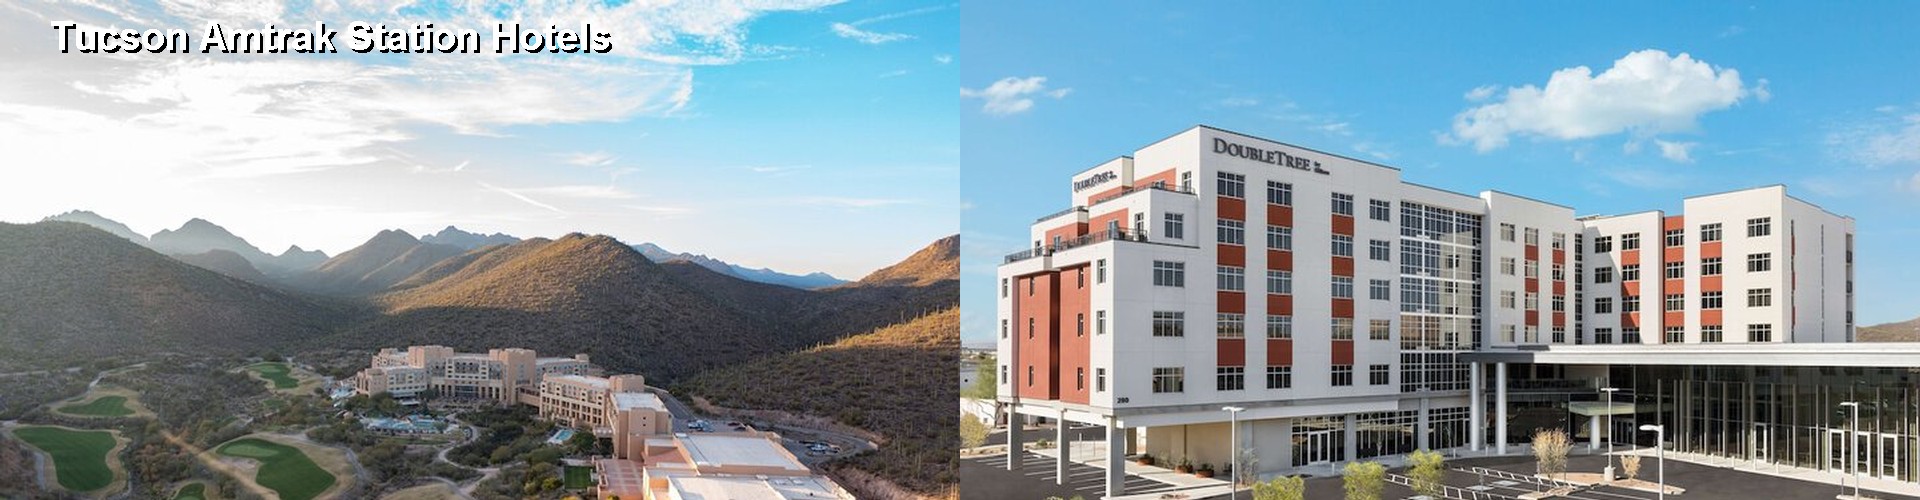 4 Best Hotels near Tucson Amtrak Station